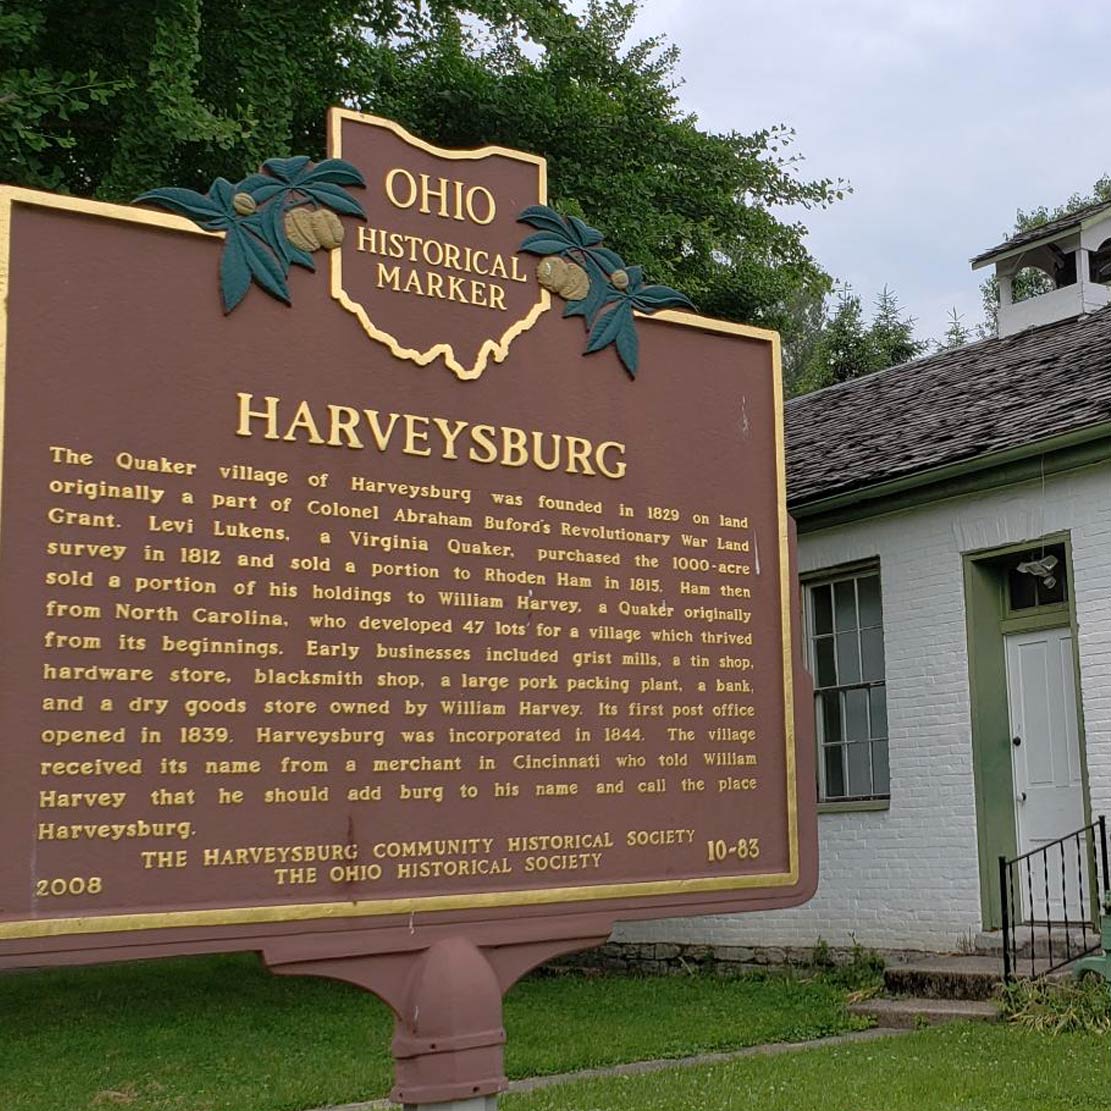 Harveysburg, Ohio HVAC Services